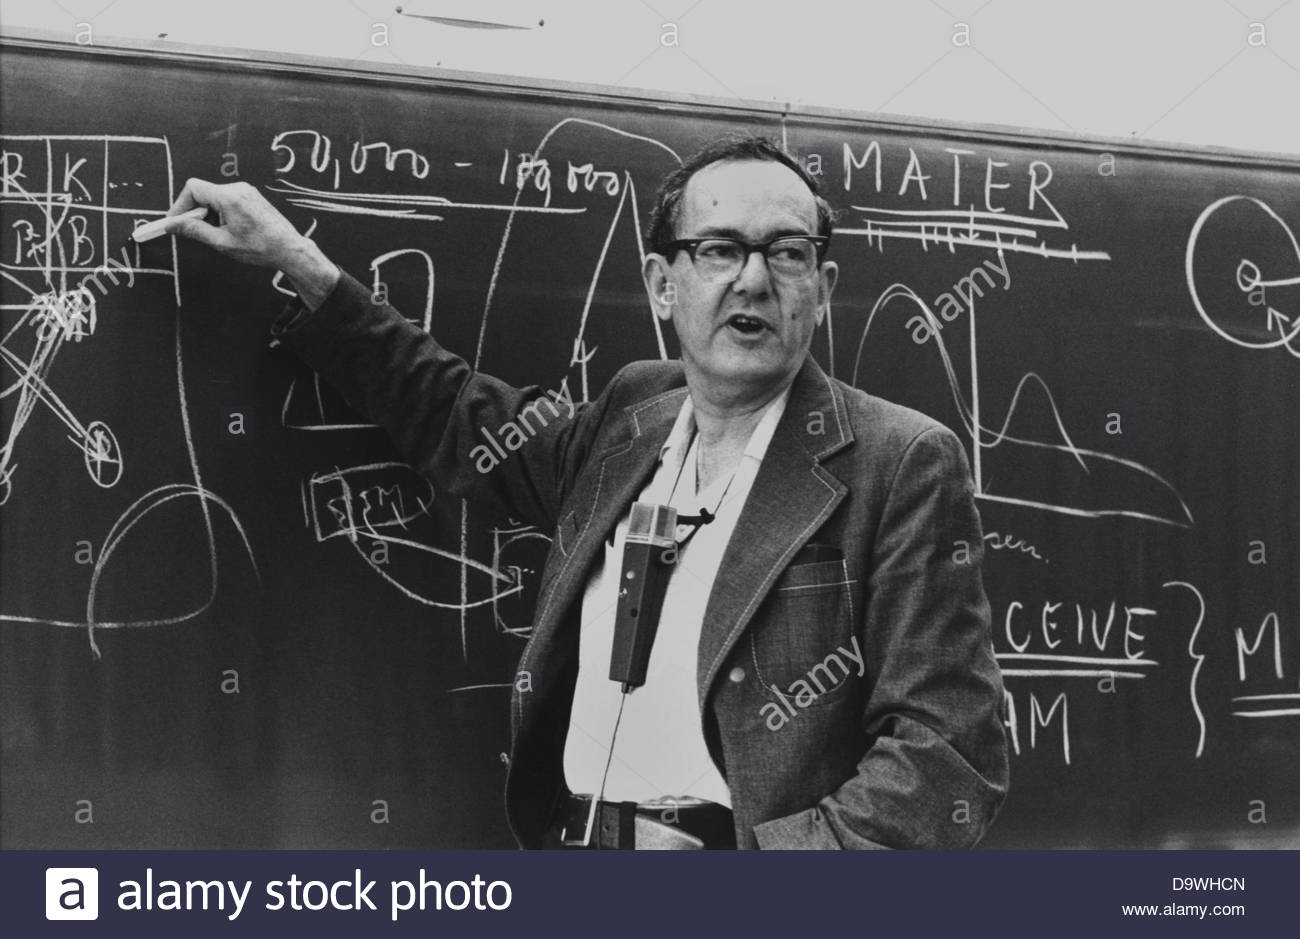 Herbert Simon นักเศรษฐศาสตร์เจ้าของรางวัลโนเบล ปี 1978